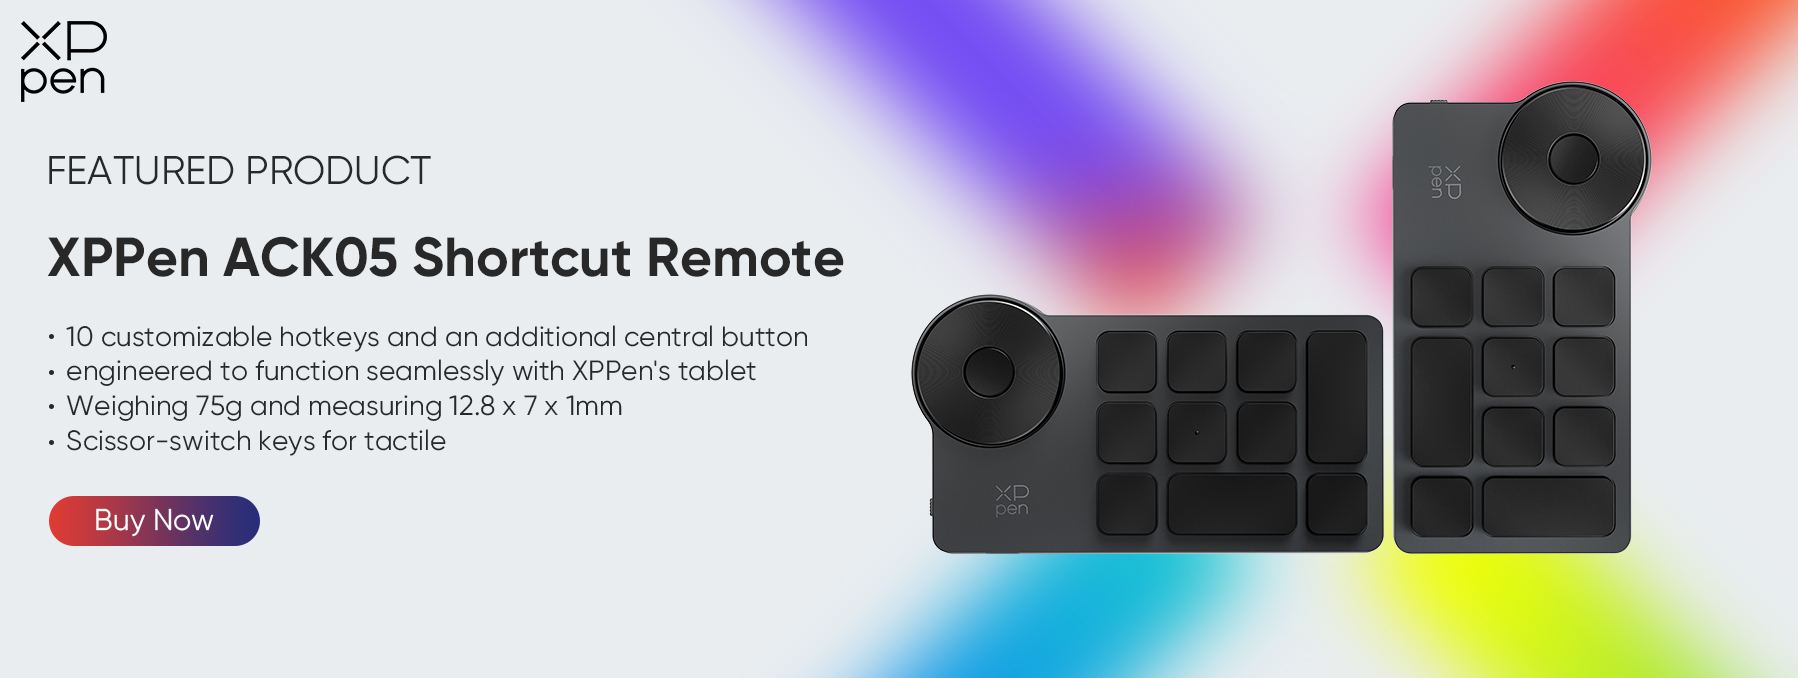 ack05-shortcut-remote.jpg